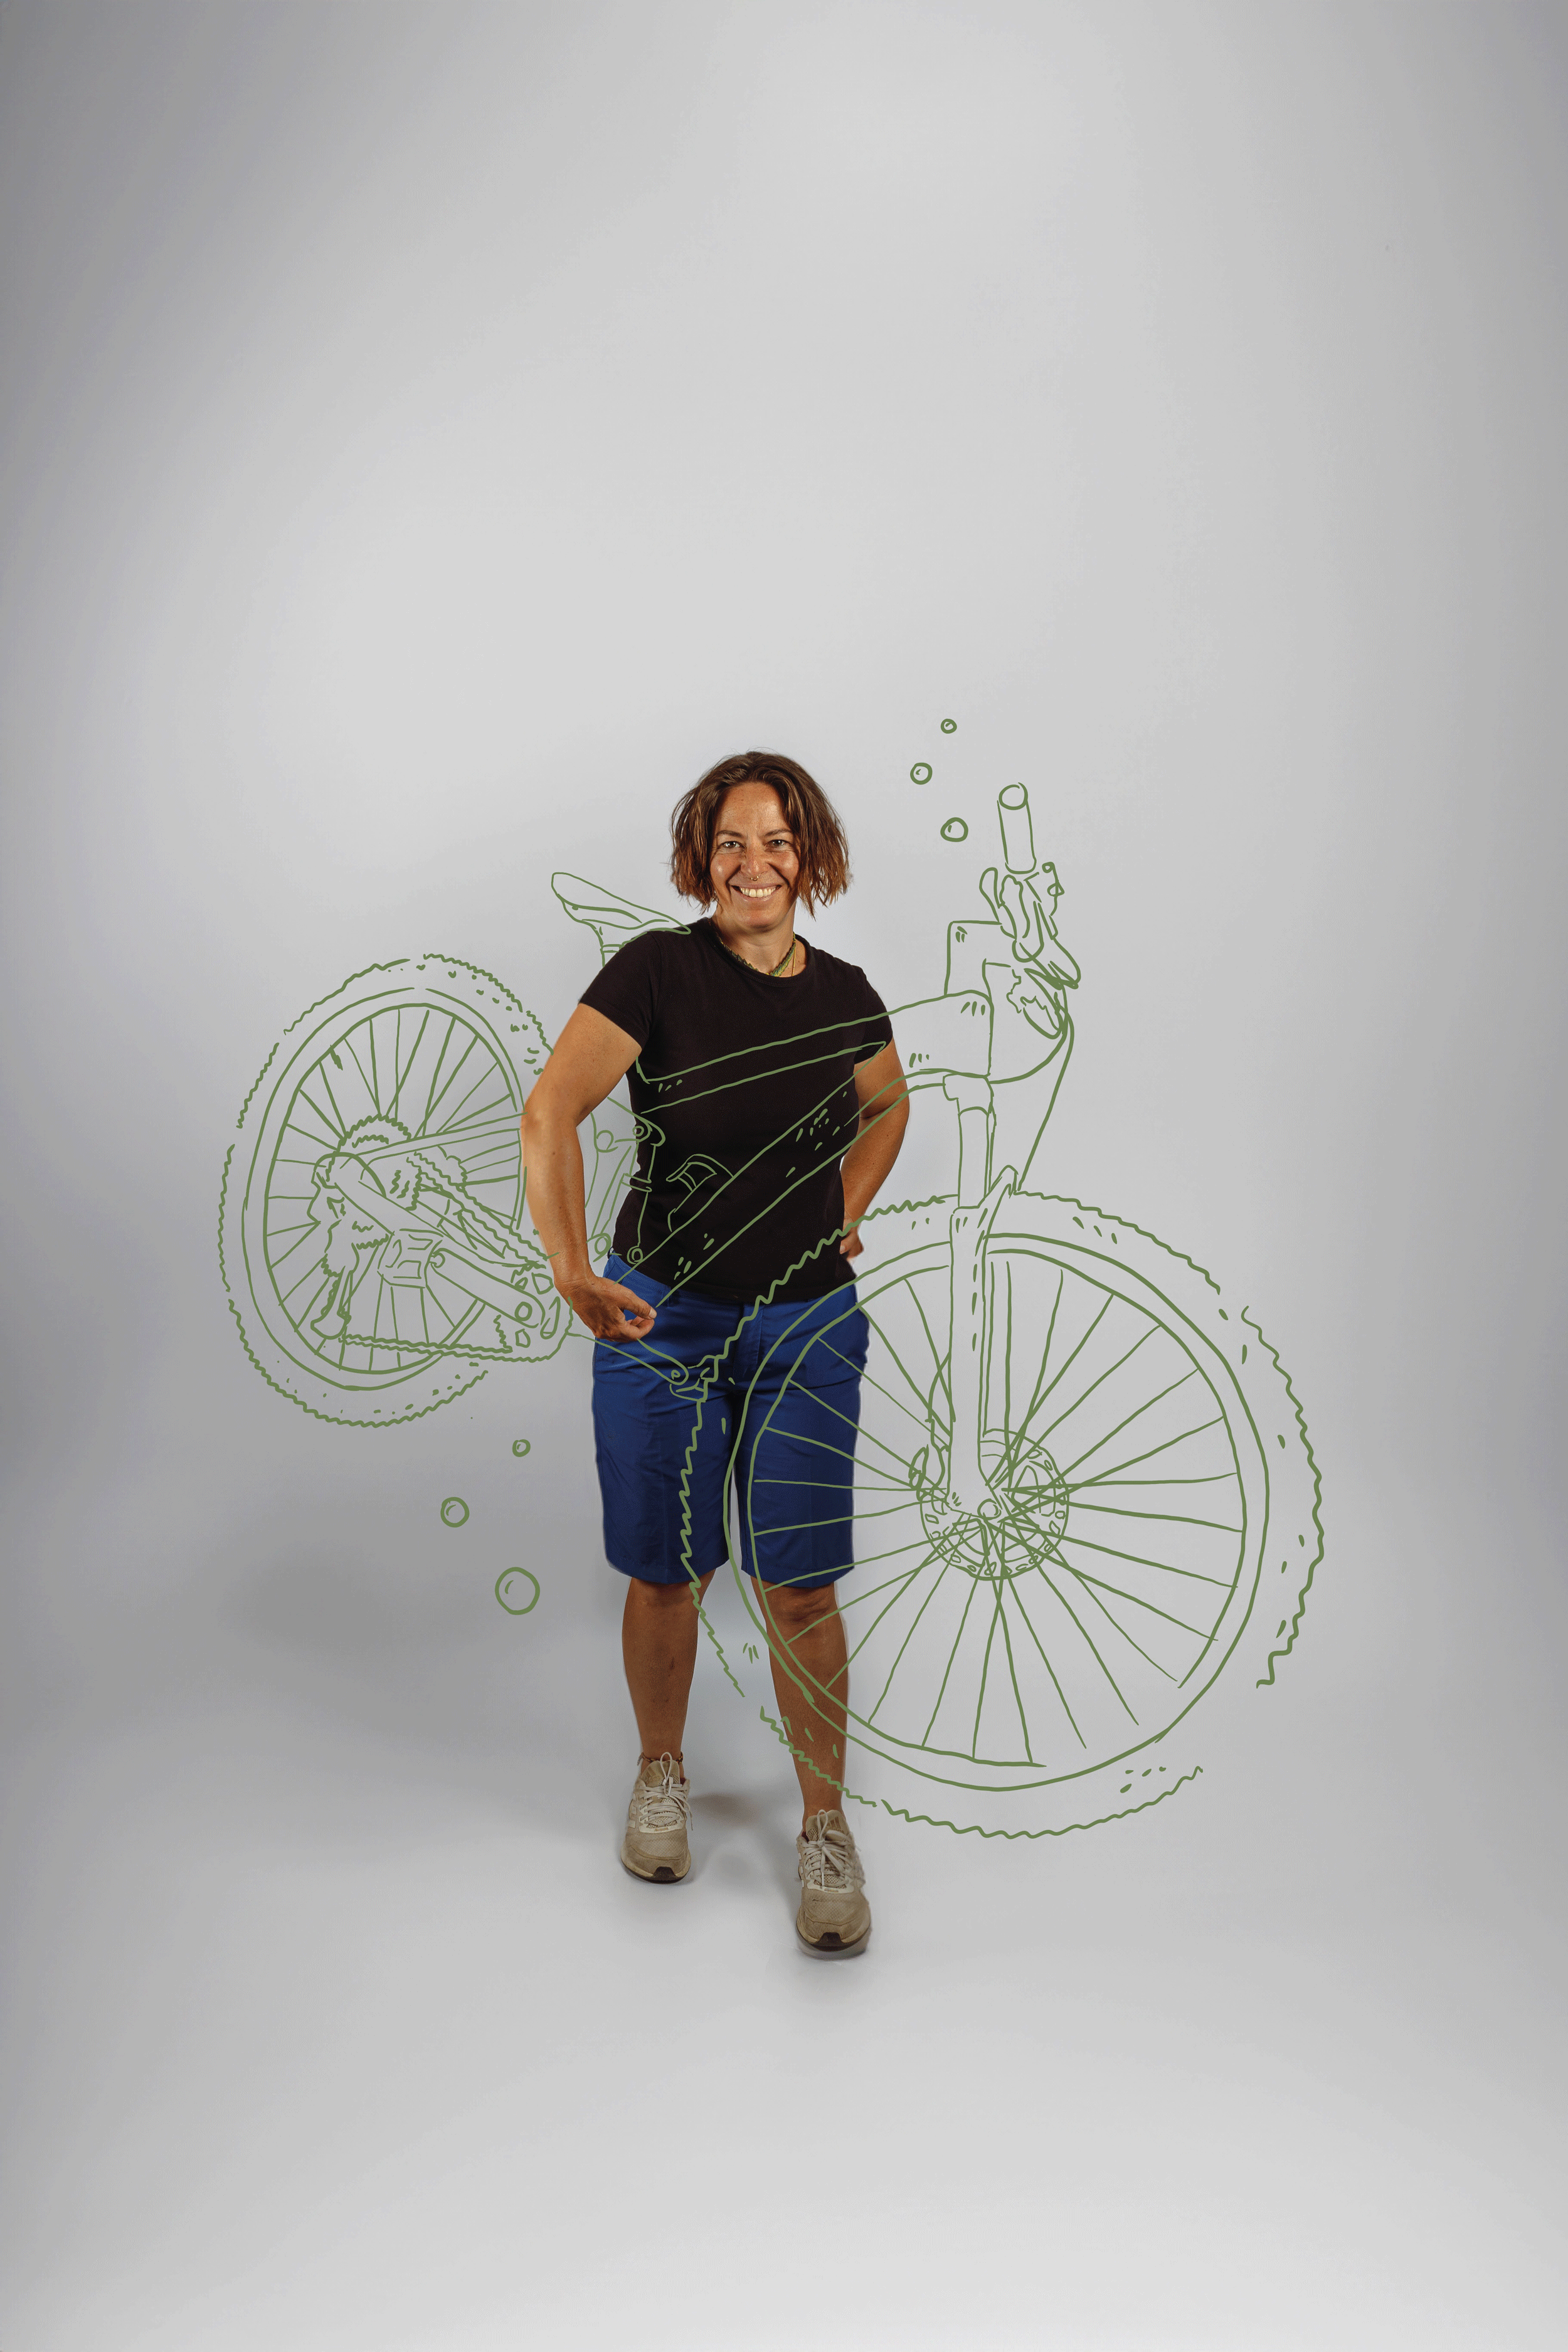 Diana Marggraff
Bike Guide / Coordinator